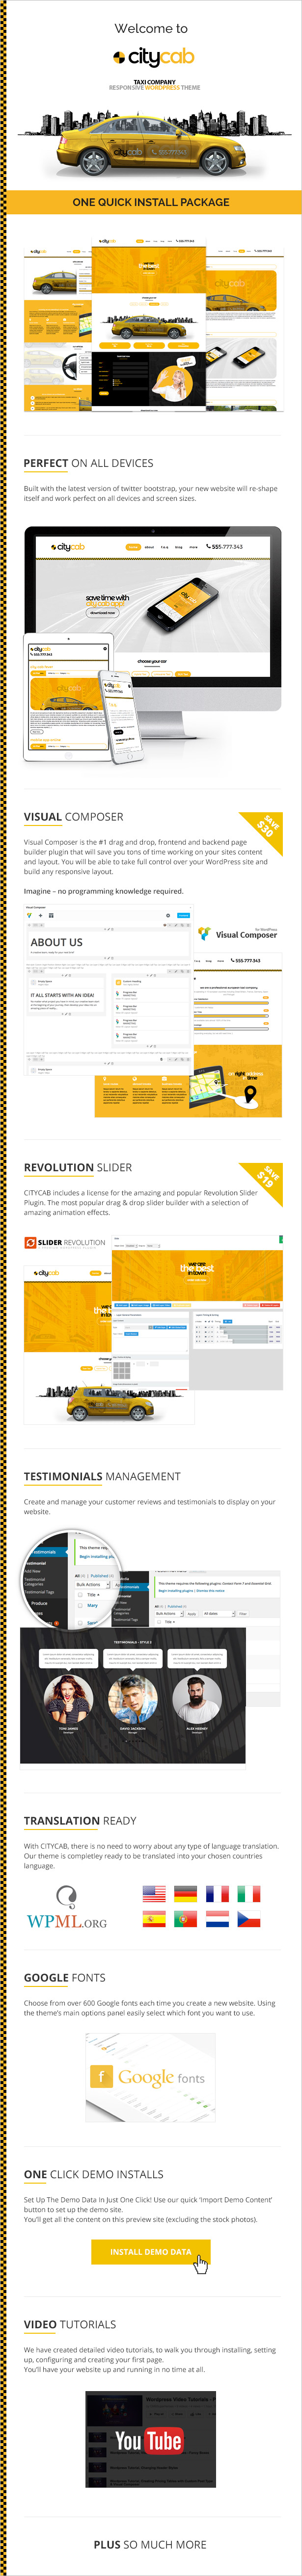 CityCab - Taxi Company & Taxi Firm WordPress Theme - 8